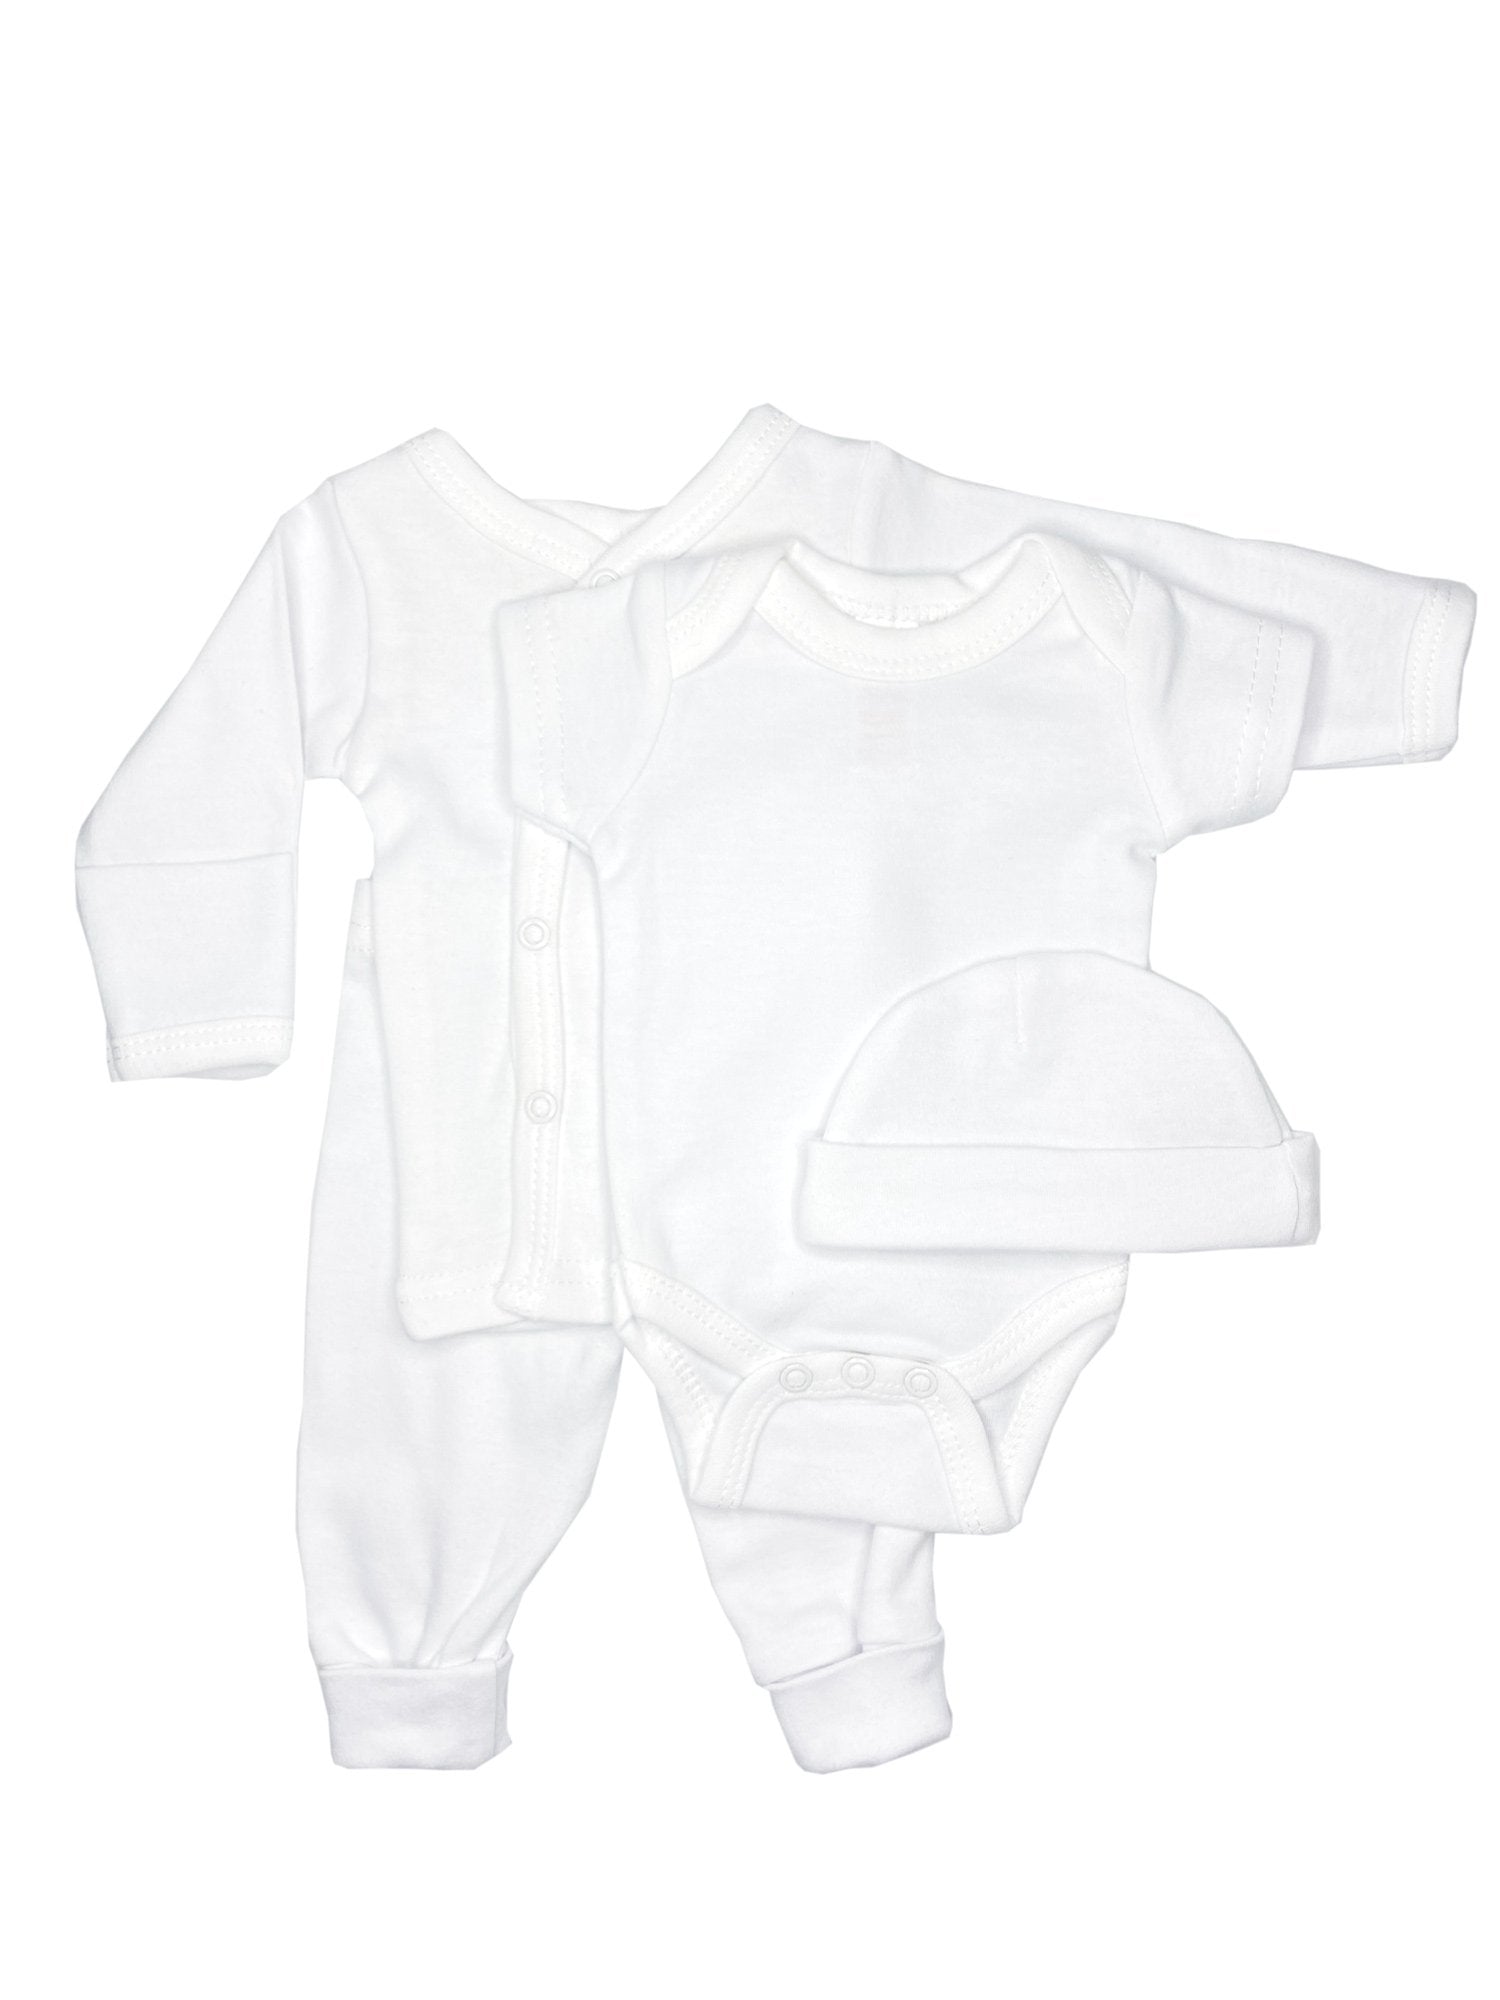 Classic White 4 piece set - Vest, Top, Trousers & Hat (4-7lbs) - Set - Soft Touch